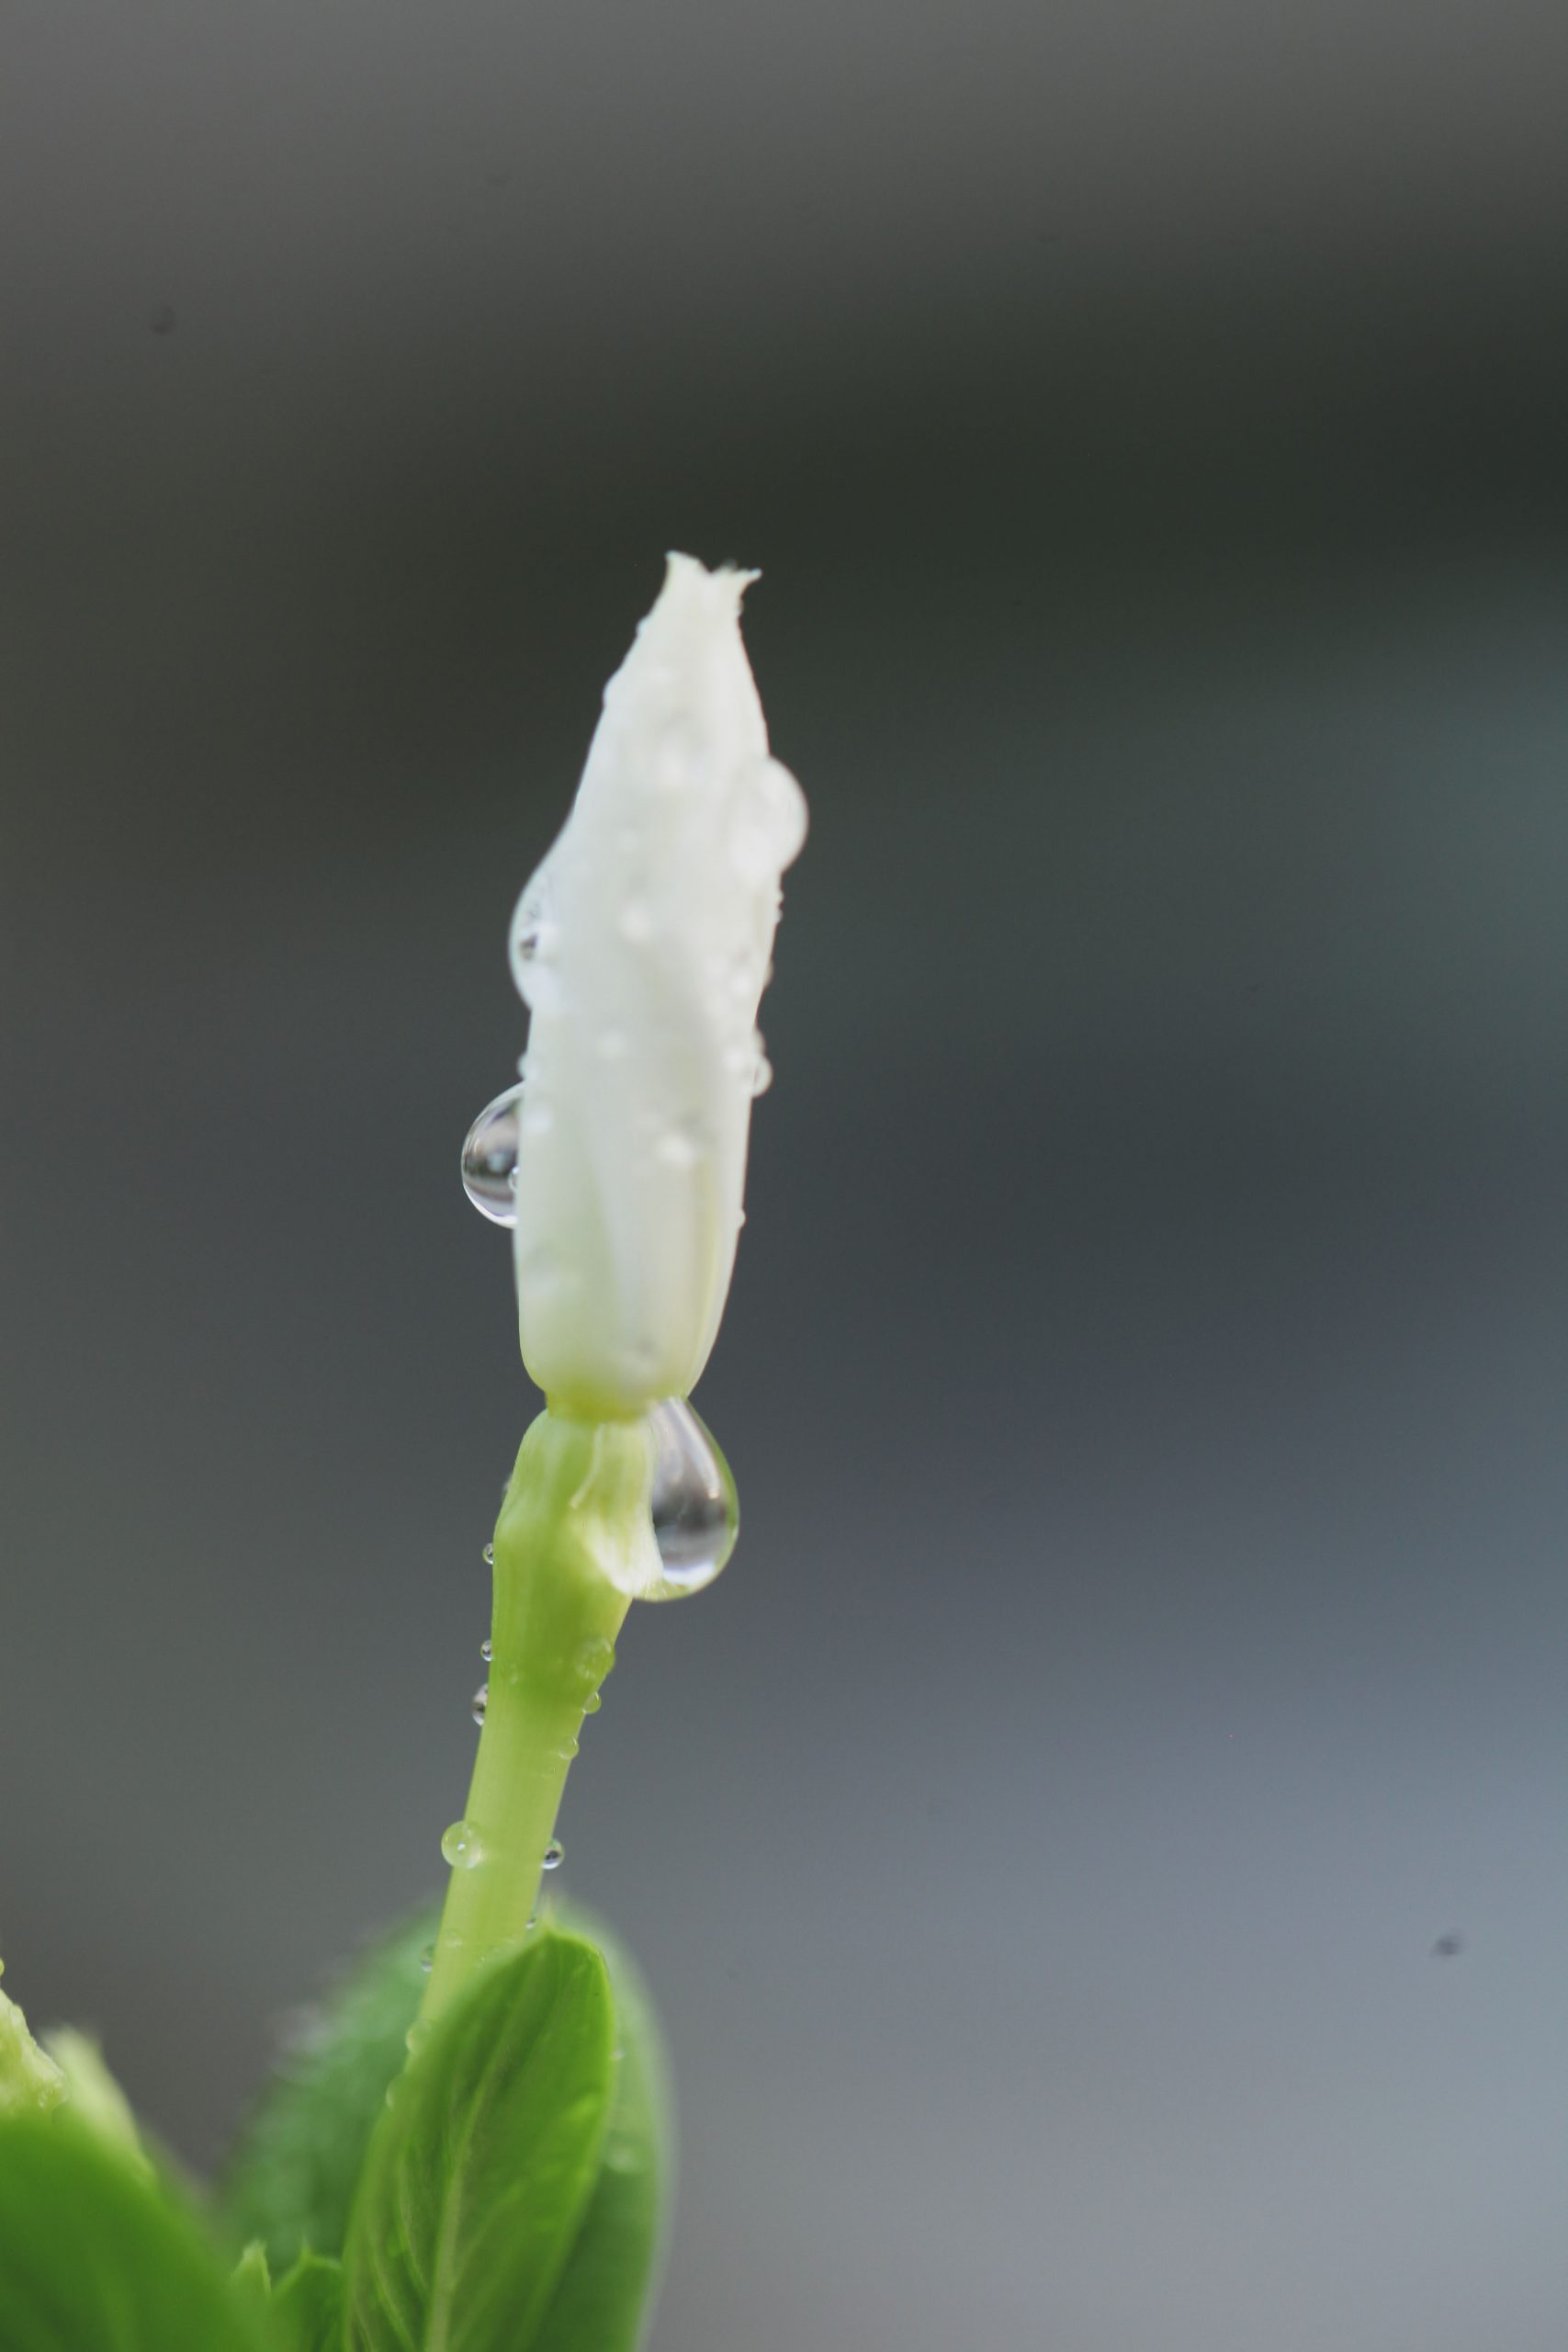 Water drops on a flower bud